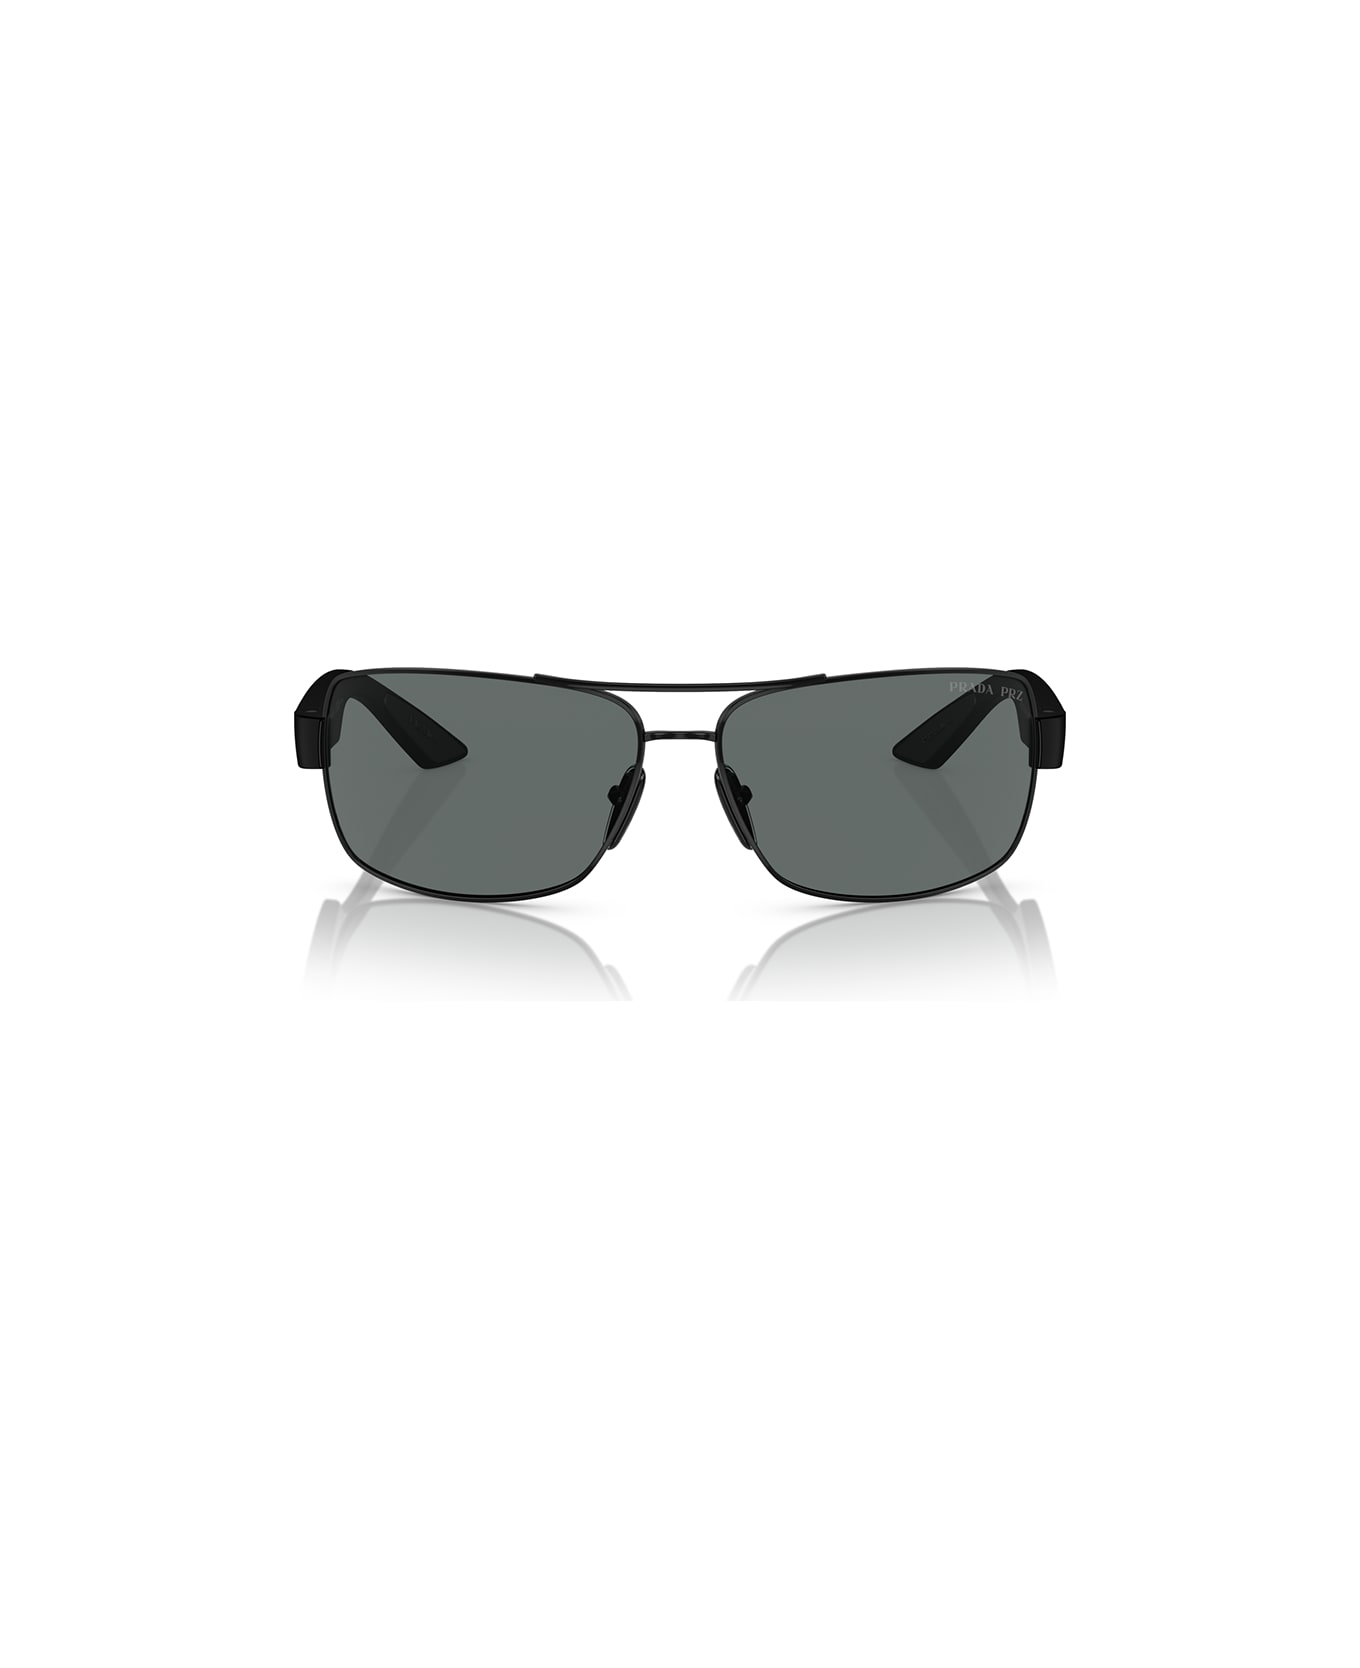 Prada Linea Rossa Sunglasses - Nero/Grigio サングラス